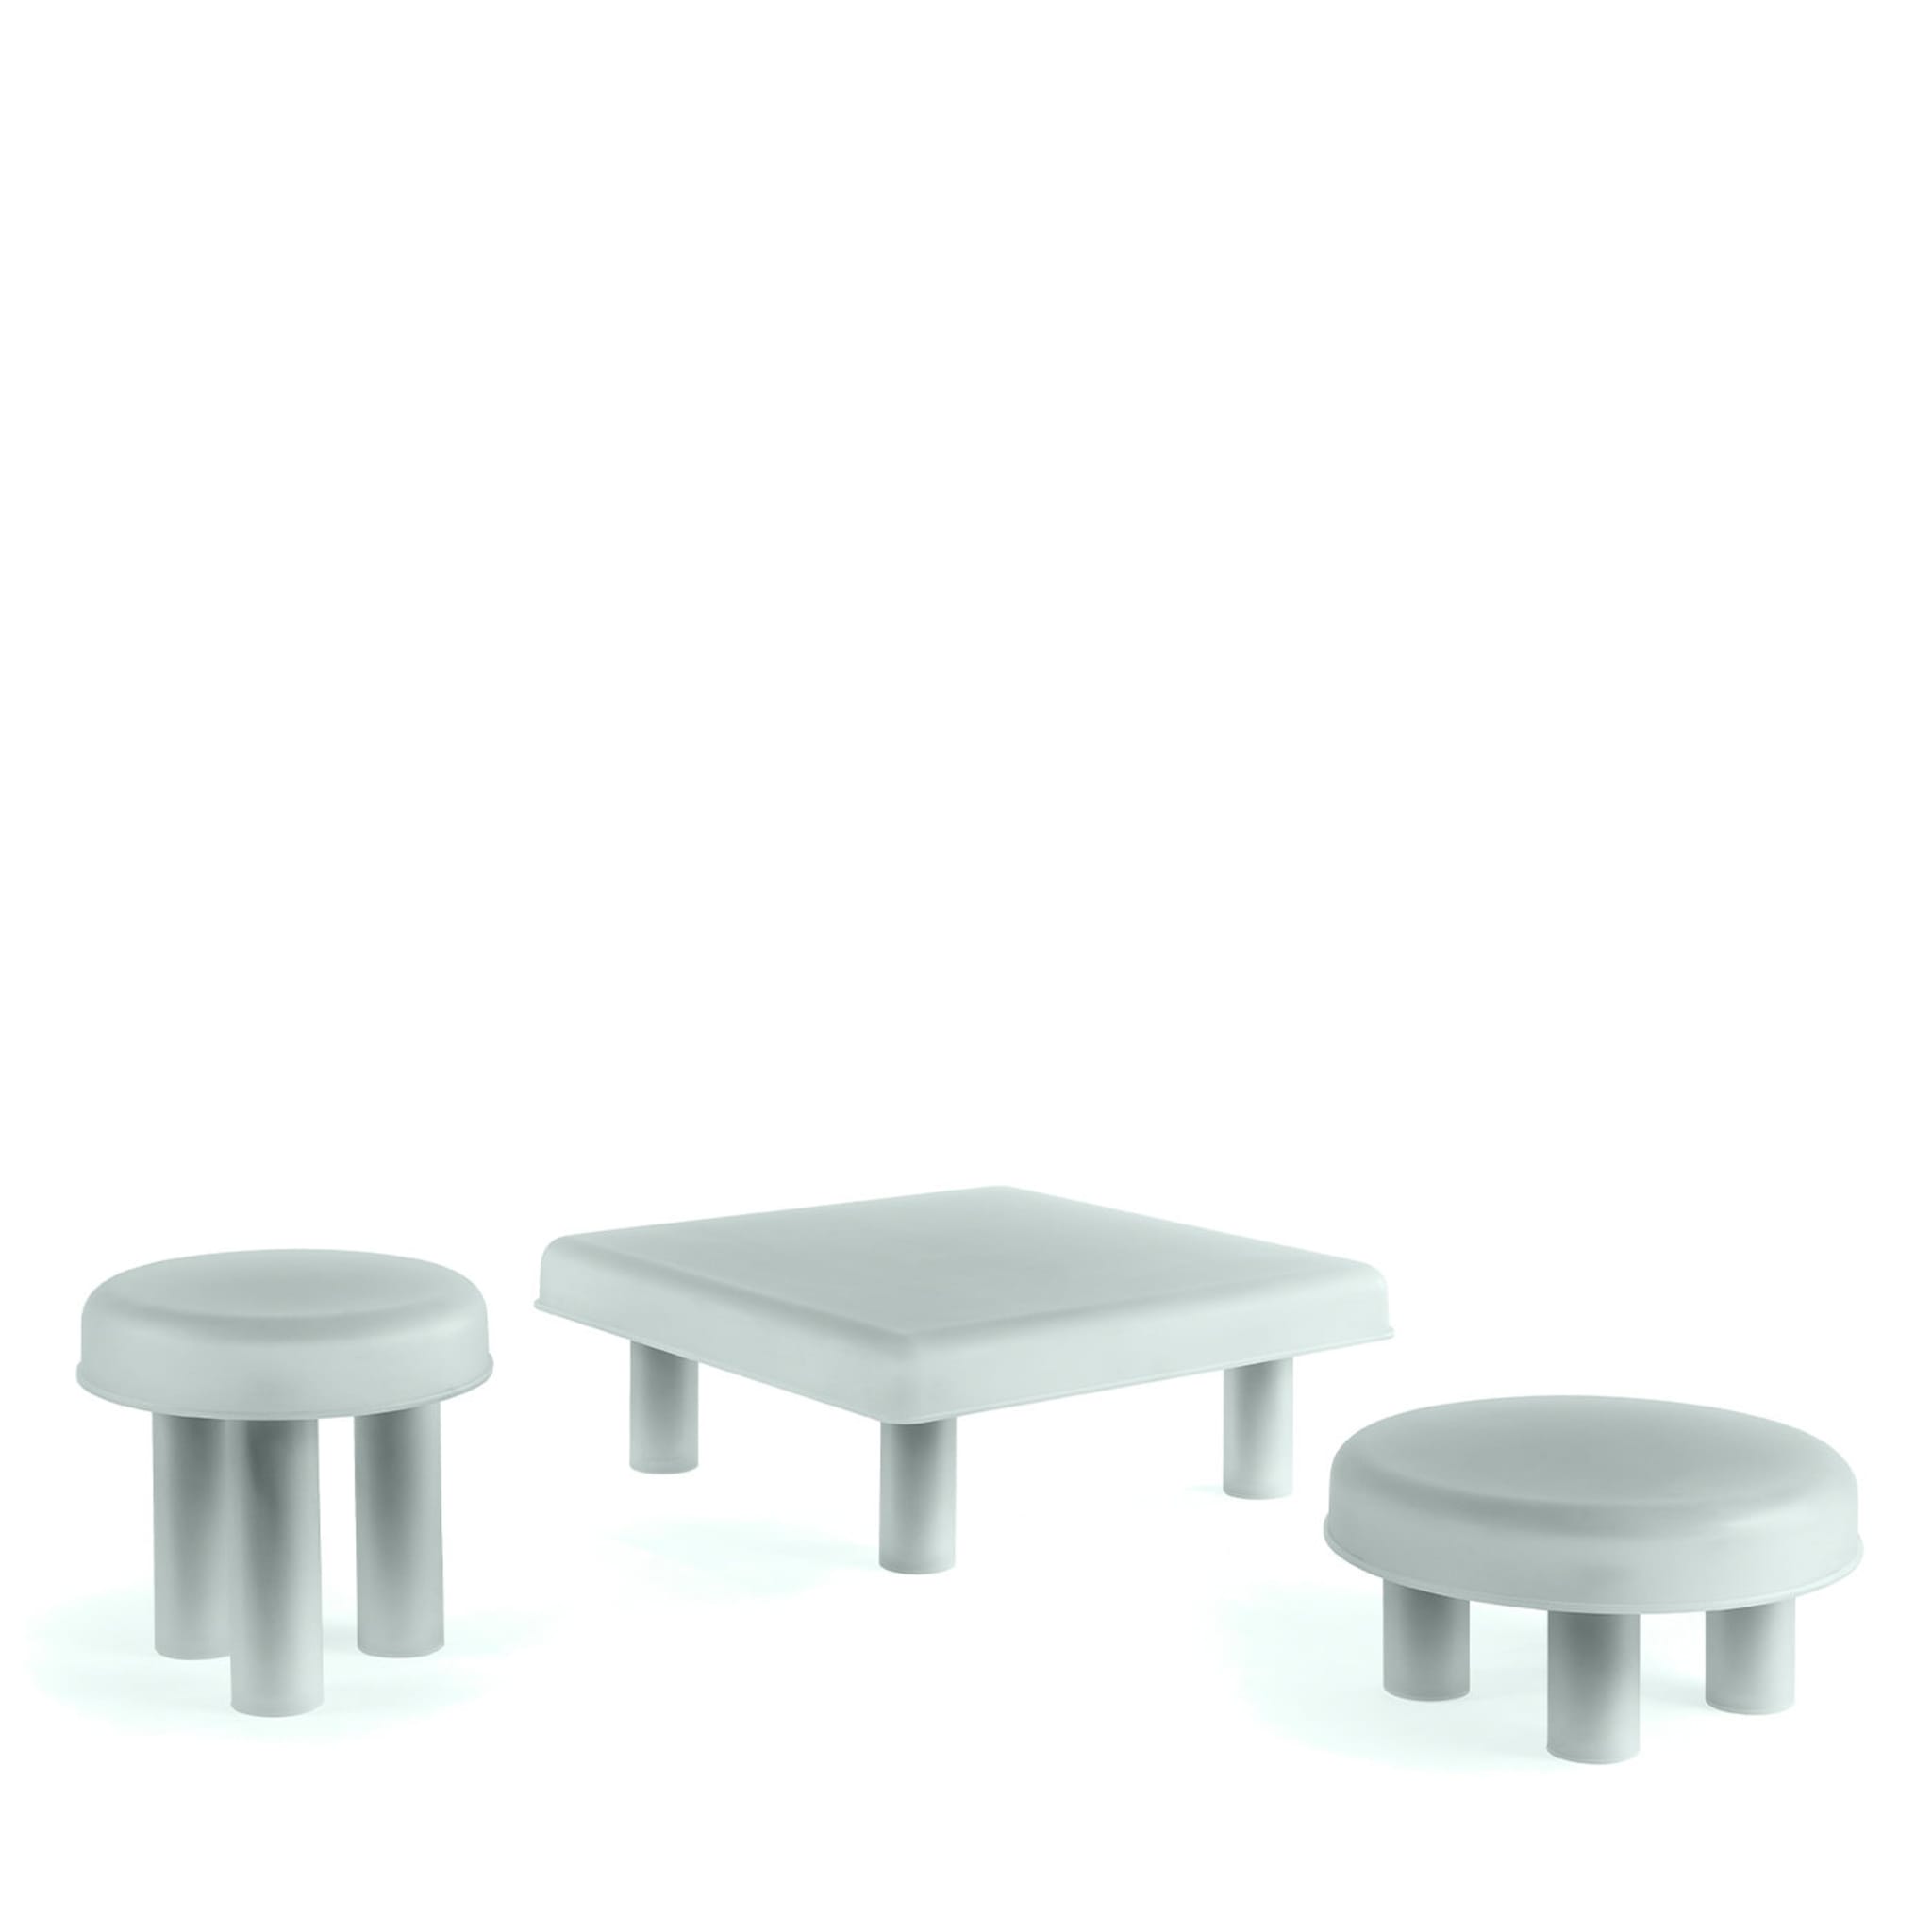 SOPOVRIA SO CENTRAL TABLE - Design by Sovrappensiero - Alternative view 1